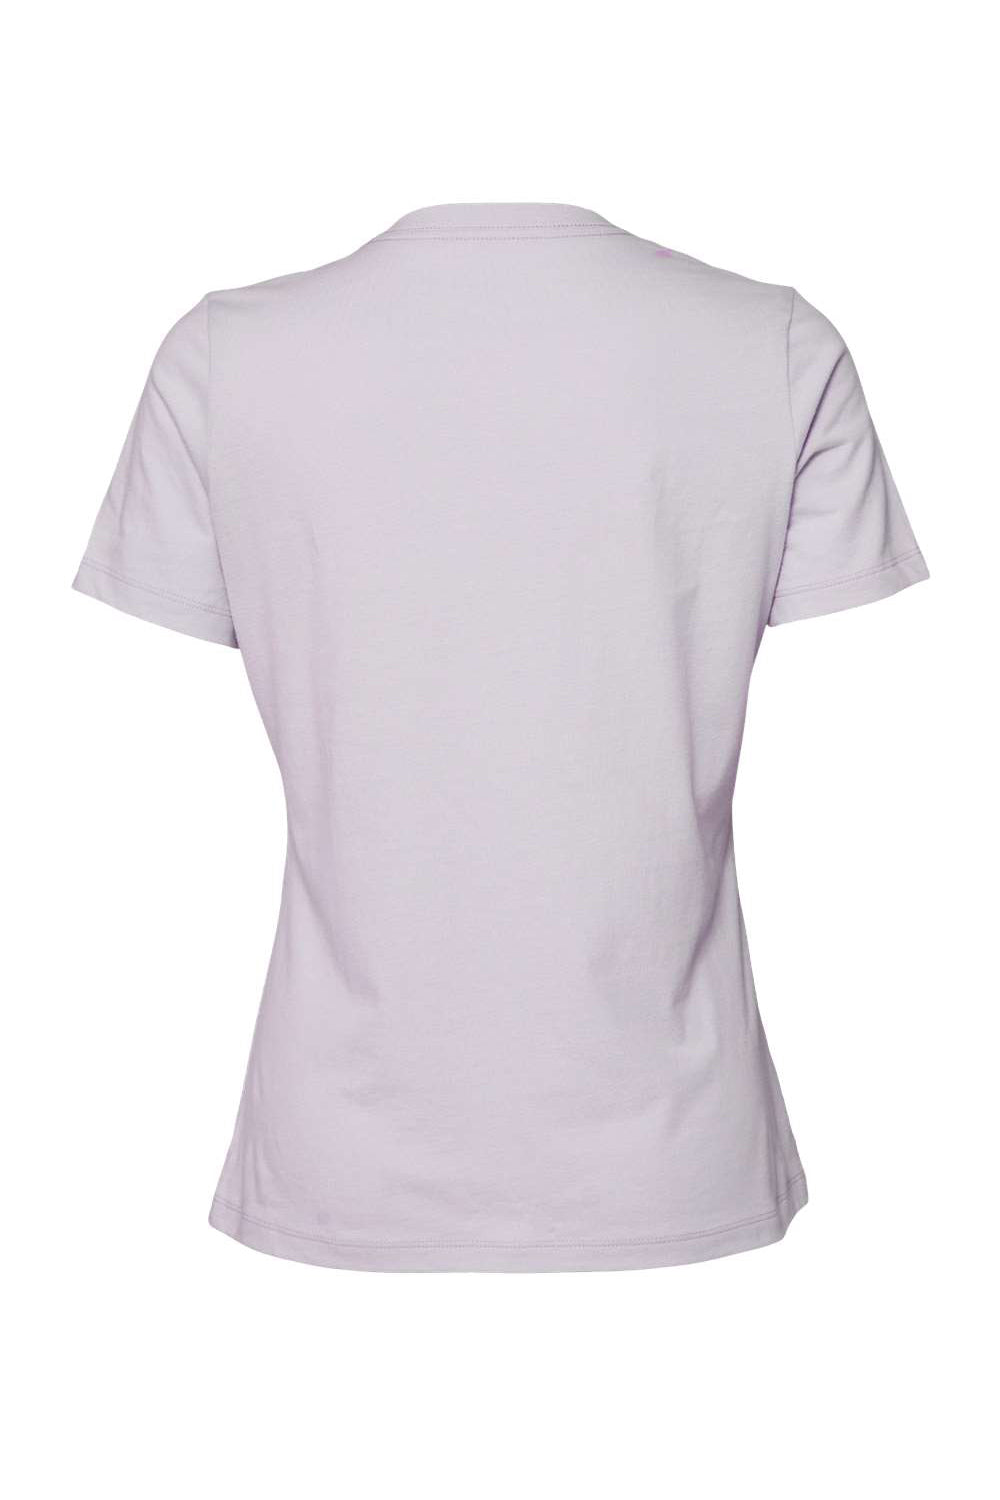 Bella + Canvas BC6400/B6400/6400 Womens Relaxed Jersey Short Sleeve Crewneck T-Shirt Lavender Dust Flat Back